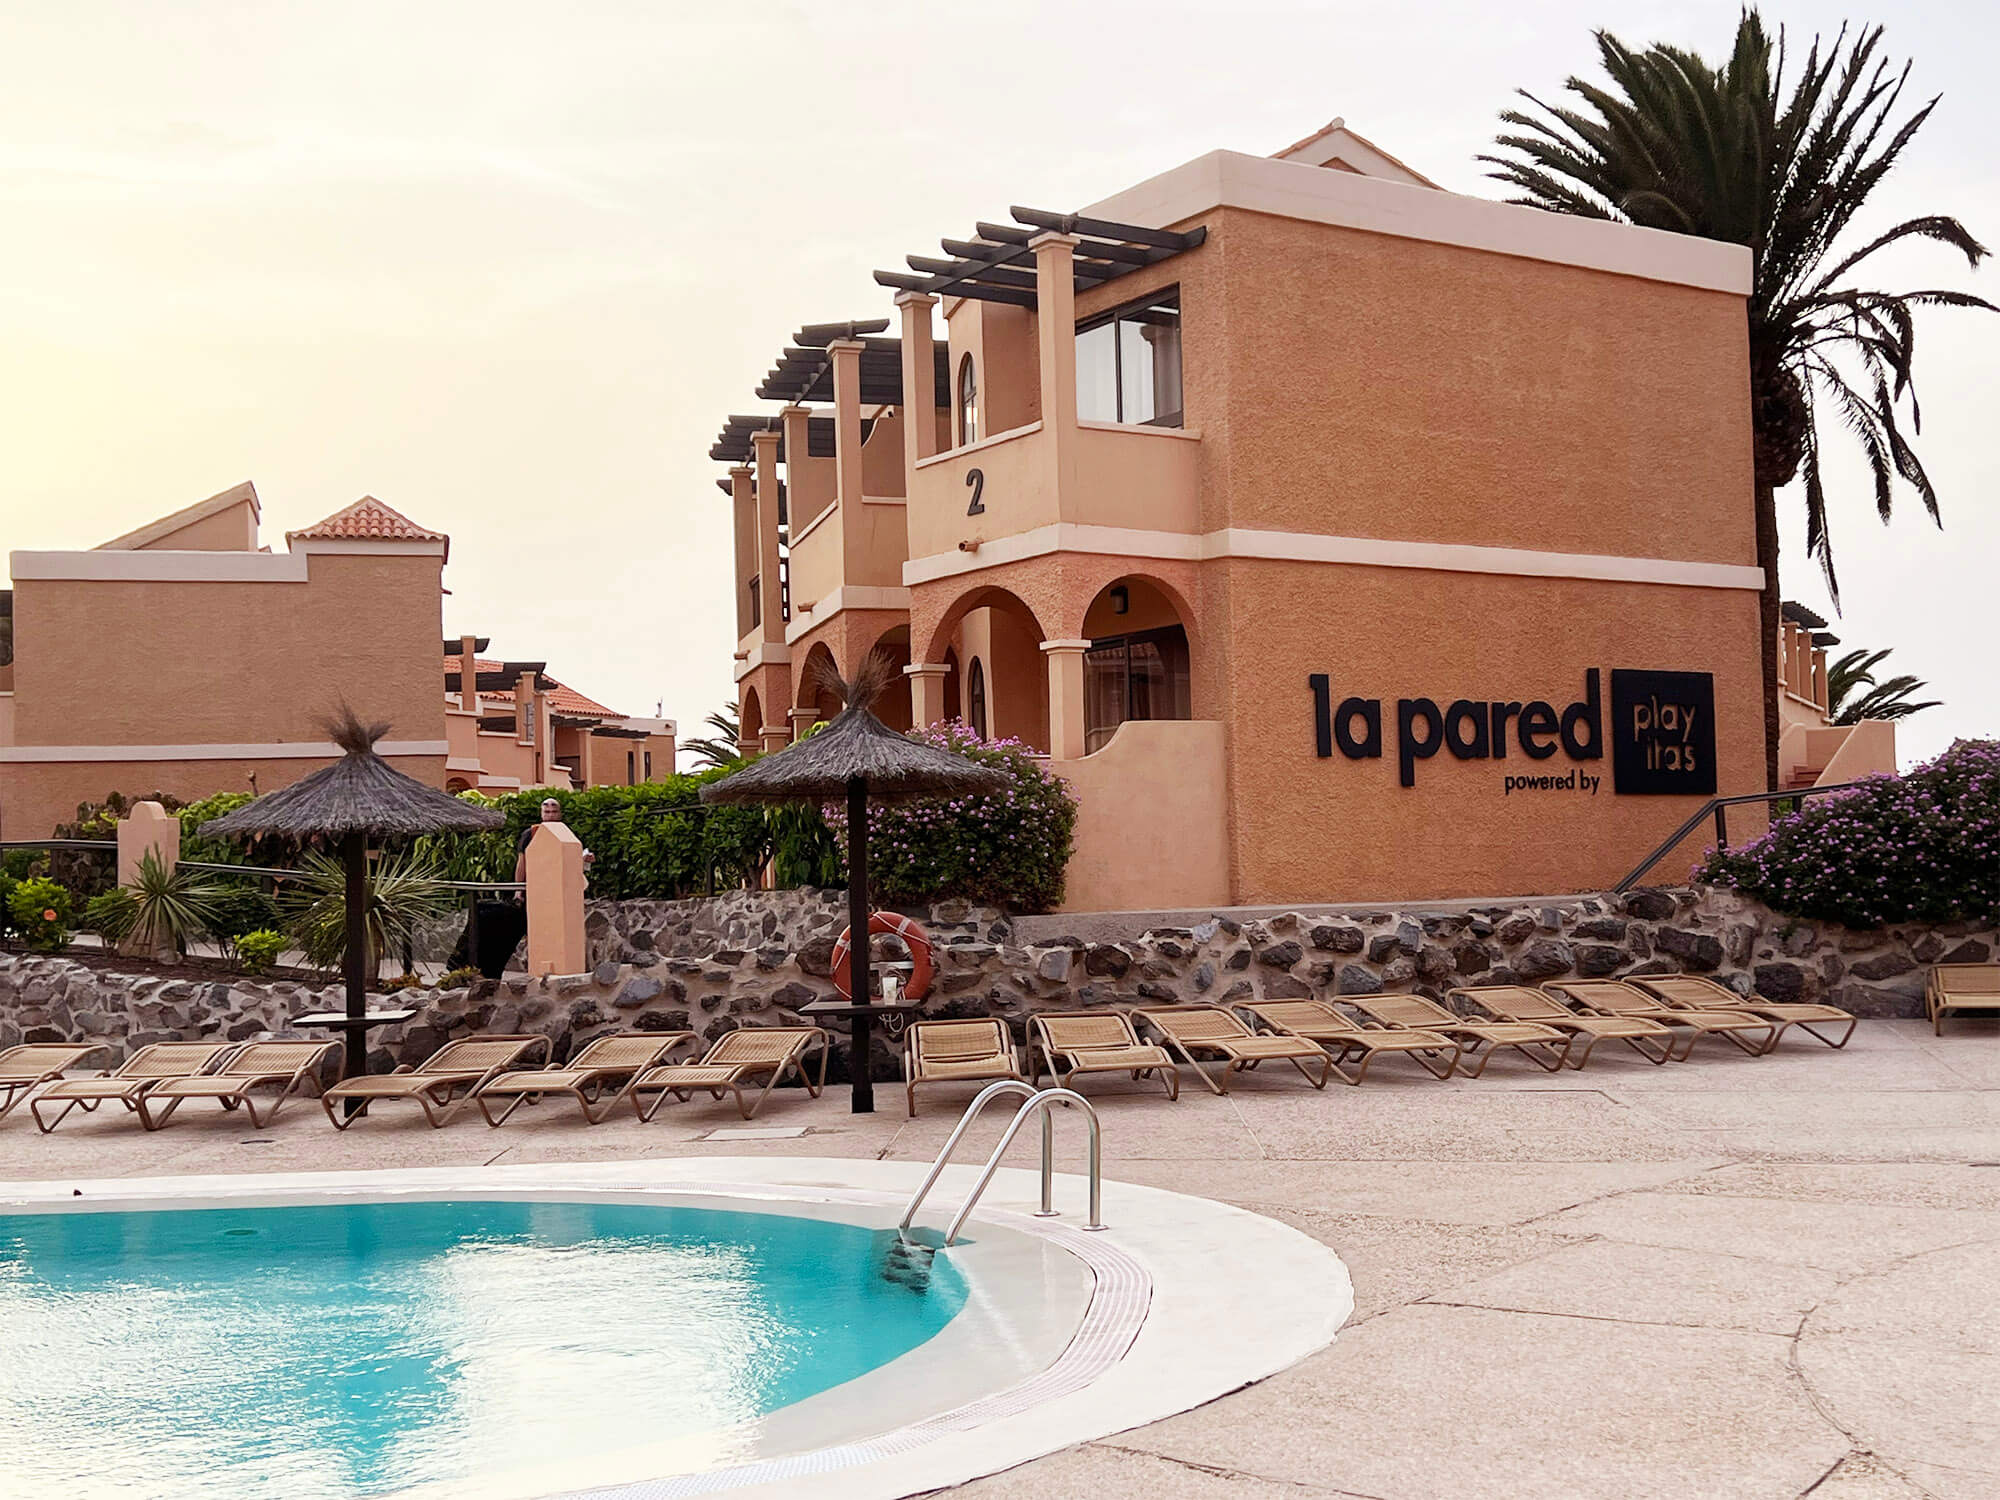 La Pared powered by Playitas - Fuerteventura Blog